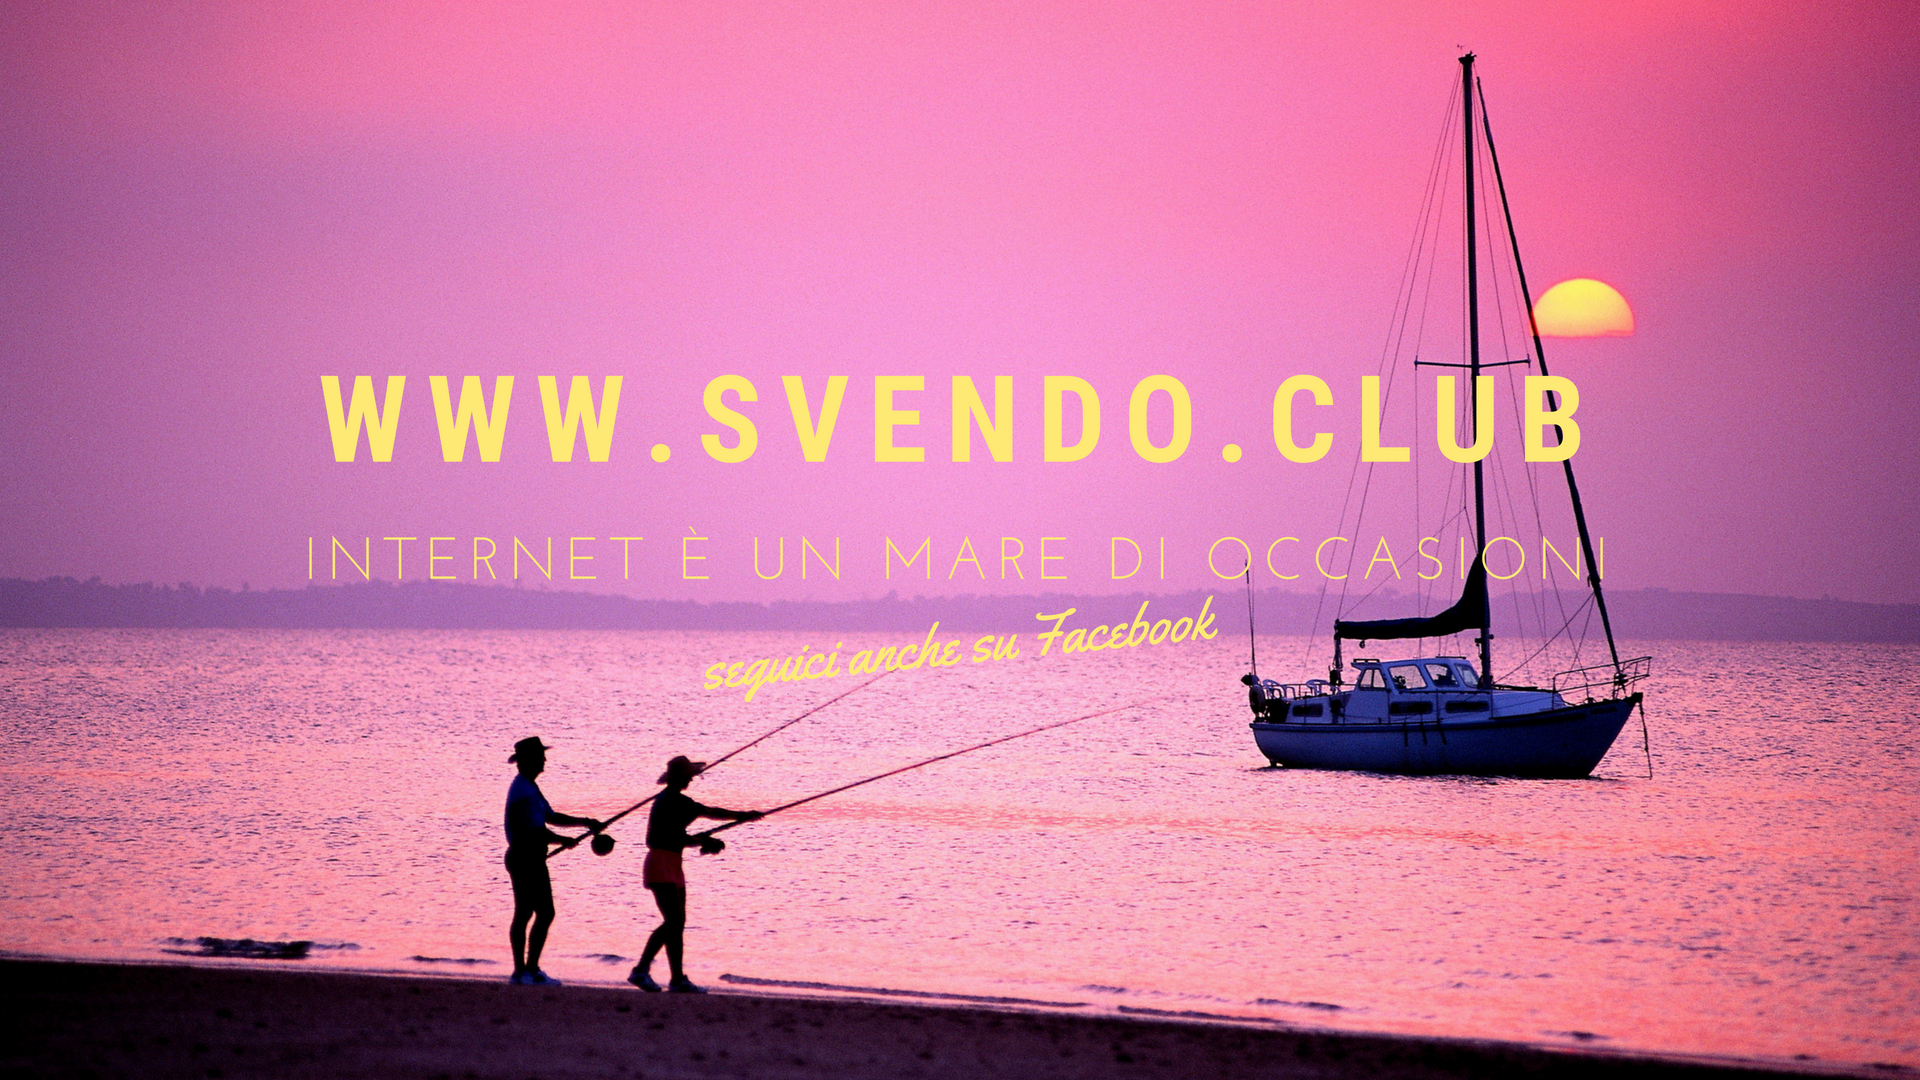 www.svendo.club.jpg